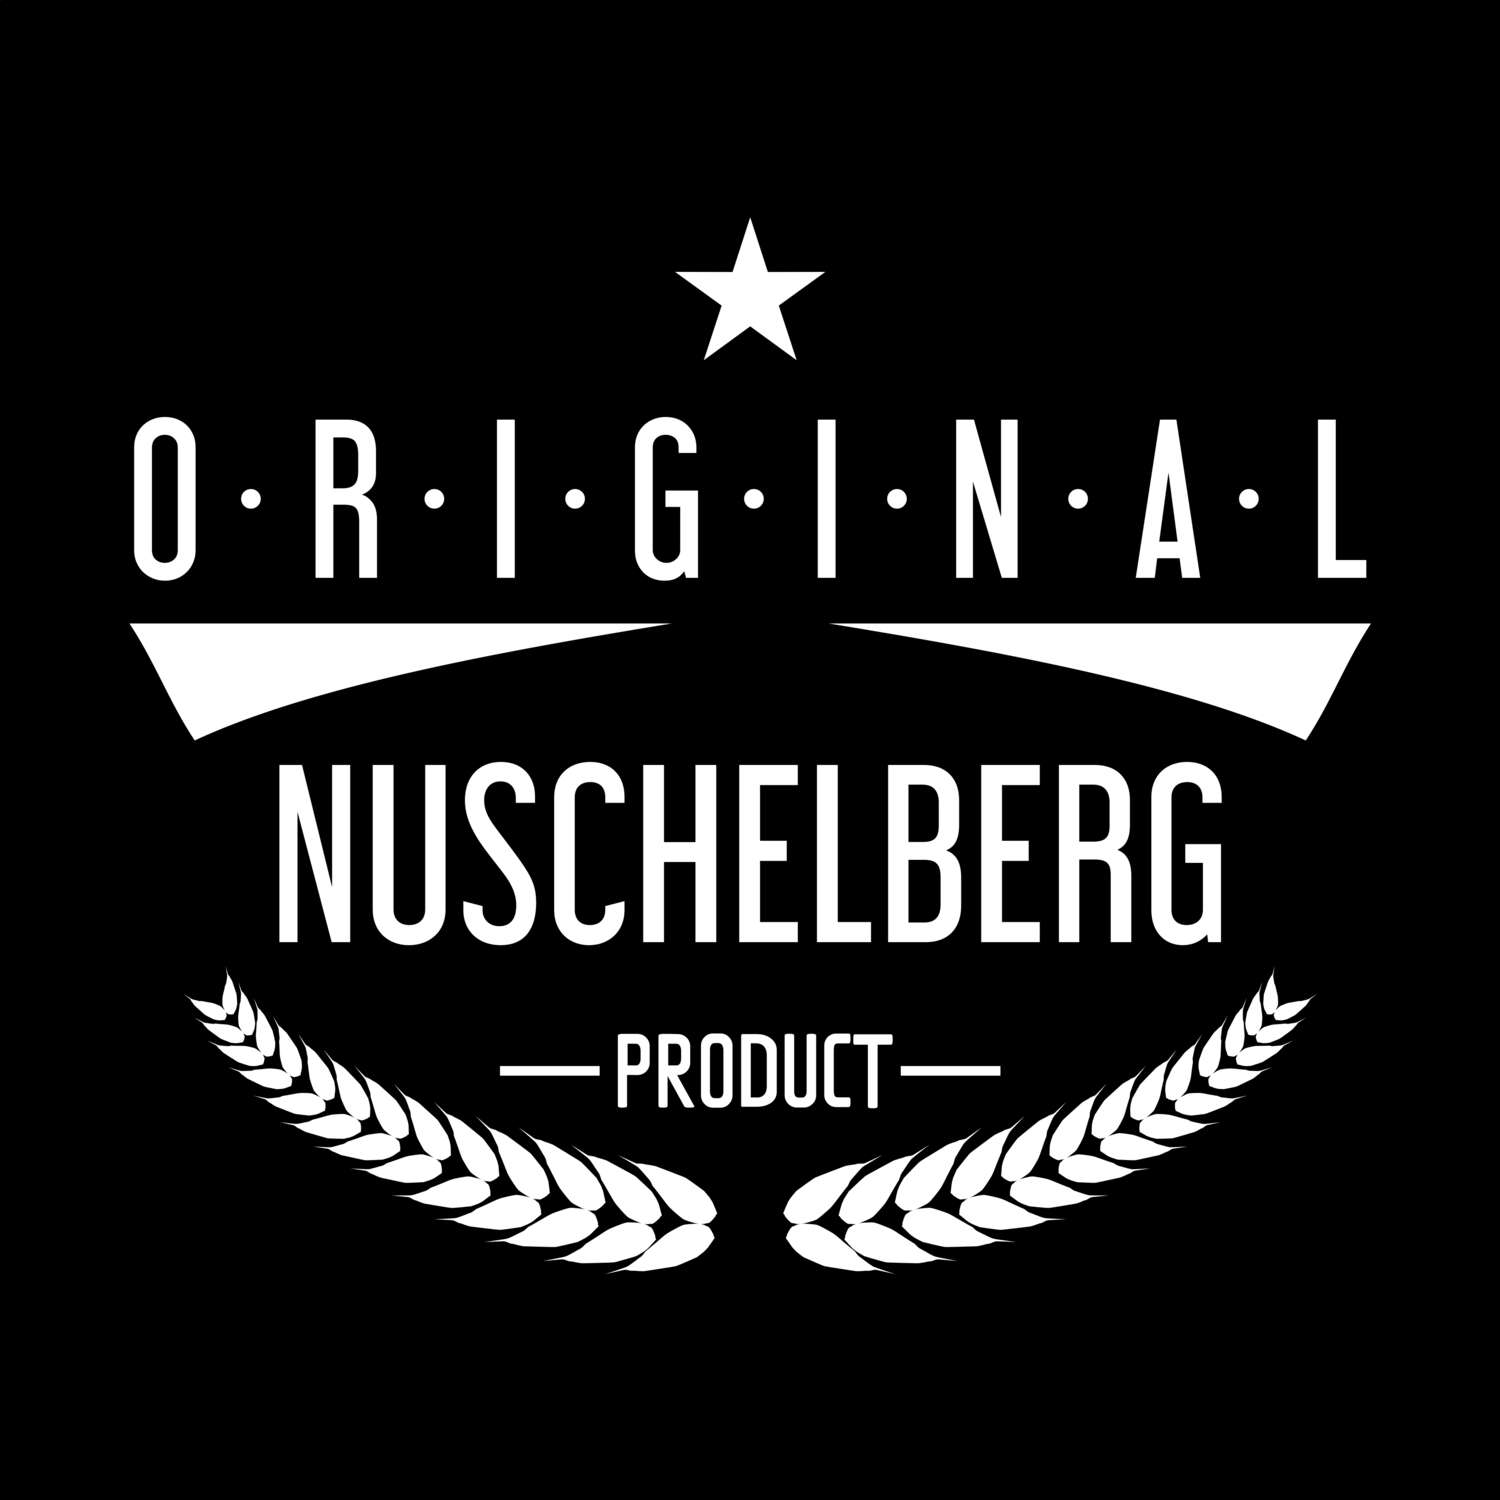 Nuschelberg T-Shirt »Original Product«